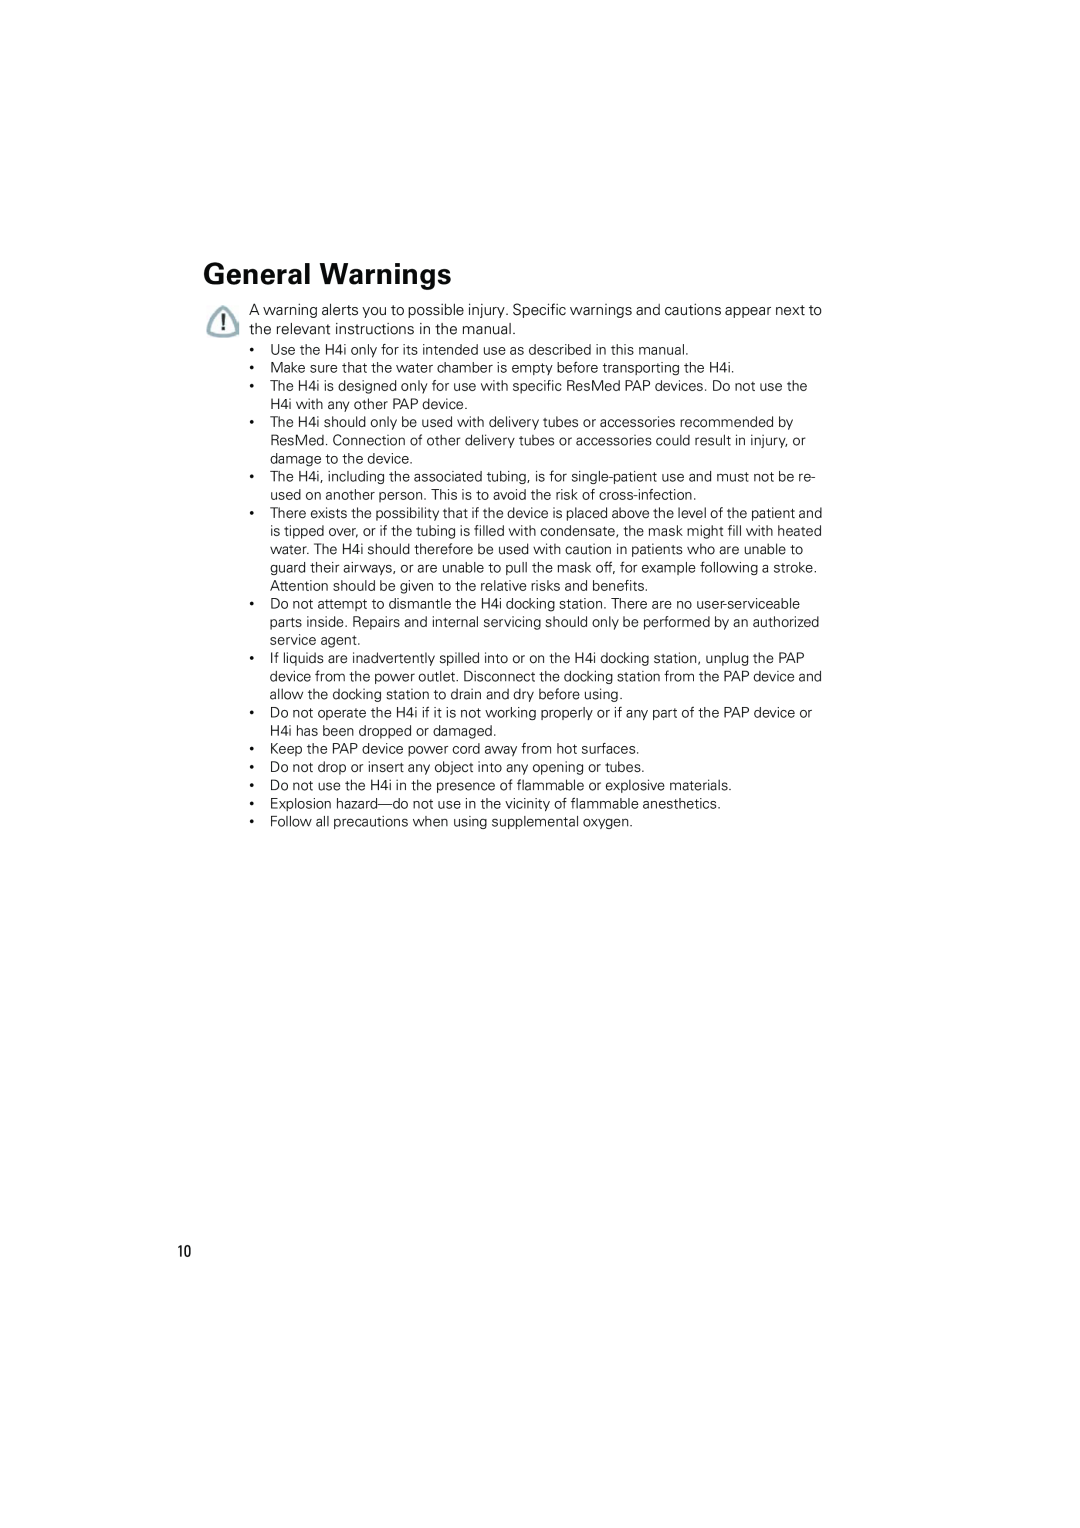 ResMed H4i manual General Warnings 